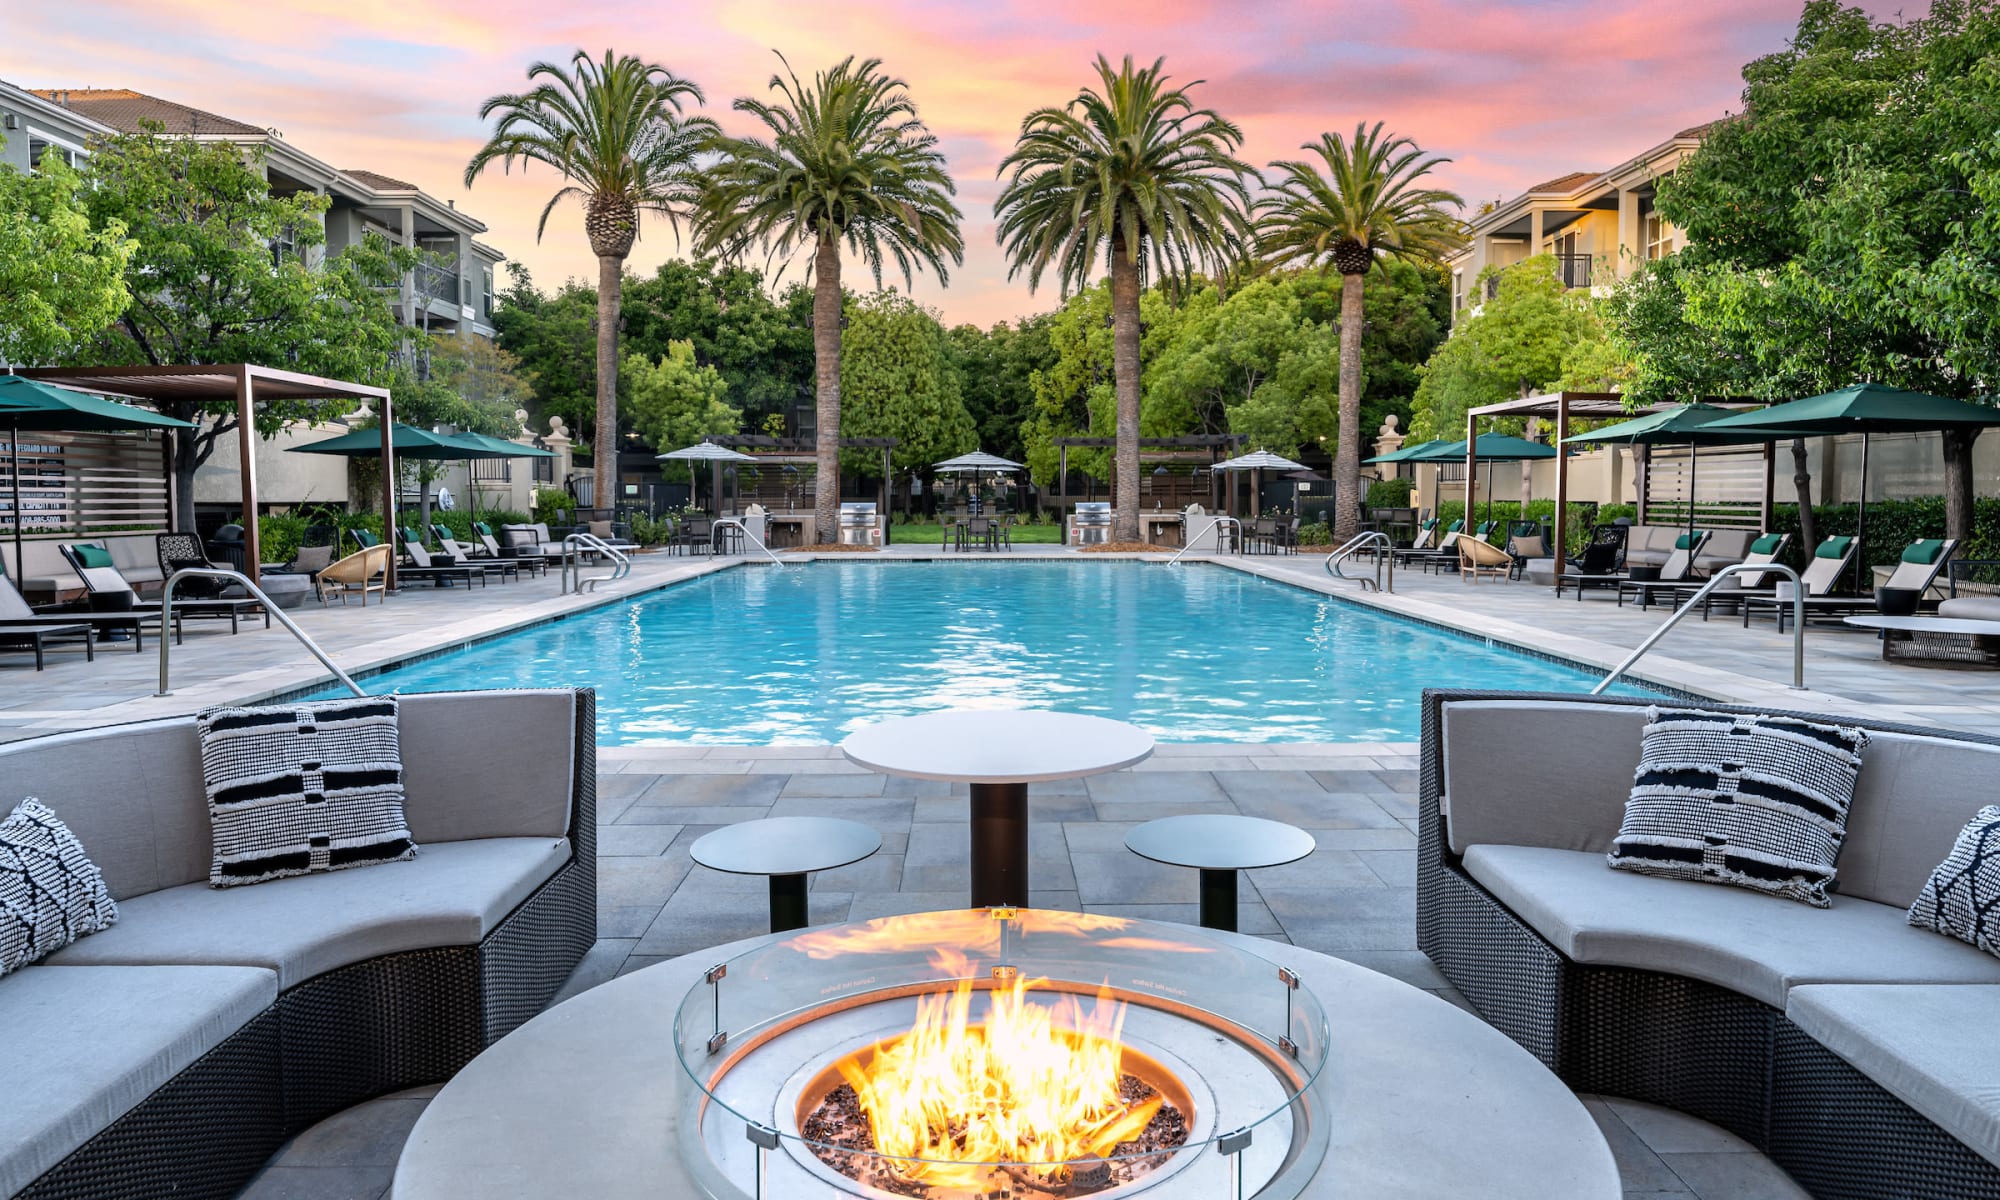 Apartments at The Carlyle in Santa Clara, California